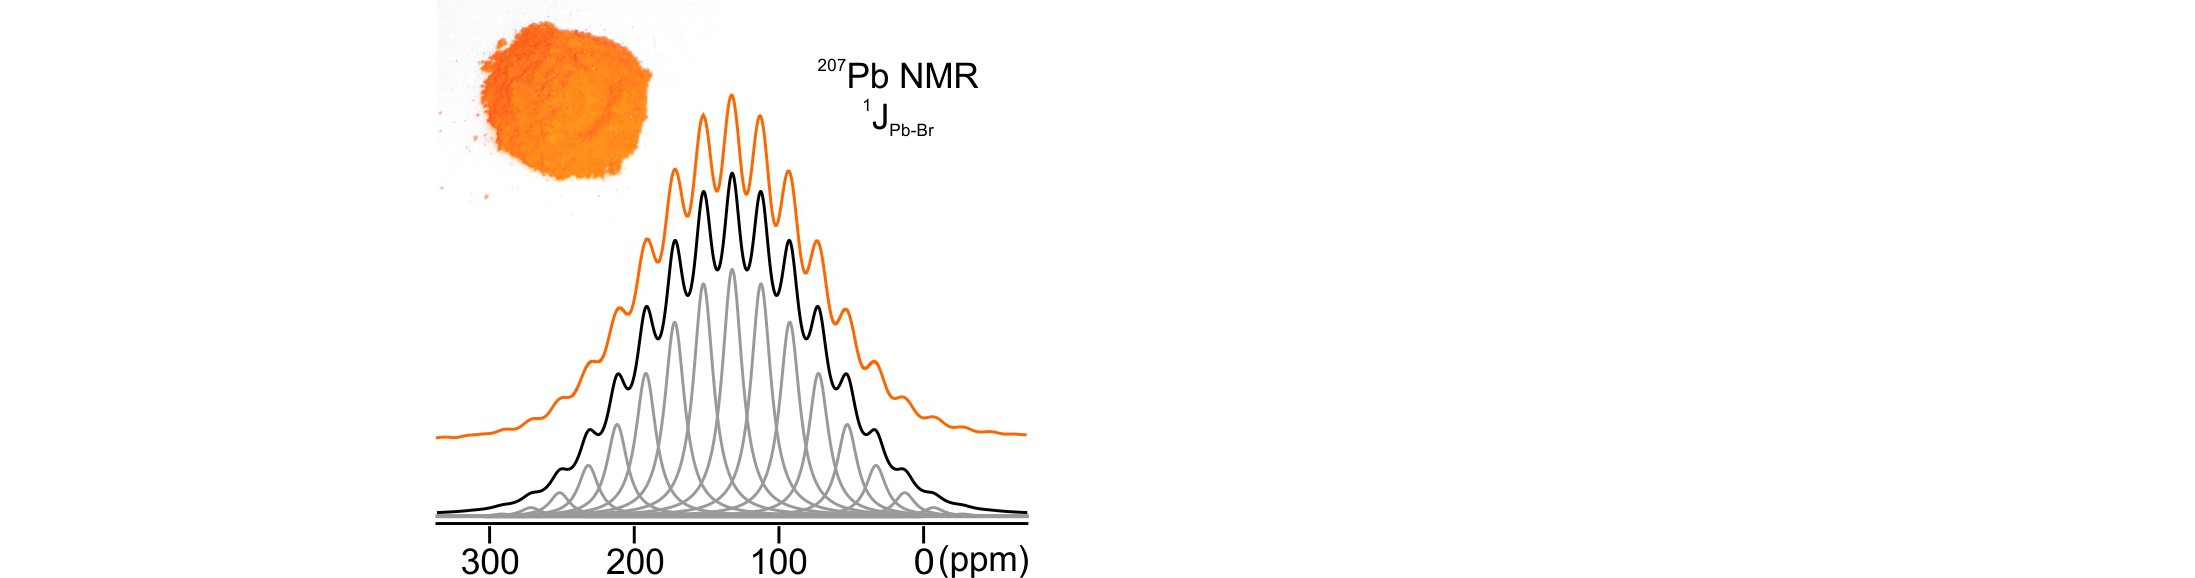 Lead-​Halide Scalar Couplings in 207Pb NMR of APbX3 Perovskites (A = Cs, Methylammonium, Formamidinium; X = Cl, Br, I)